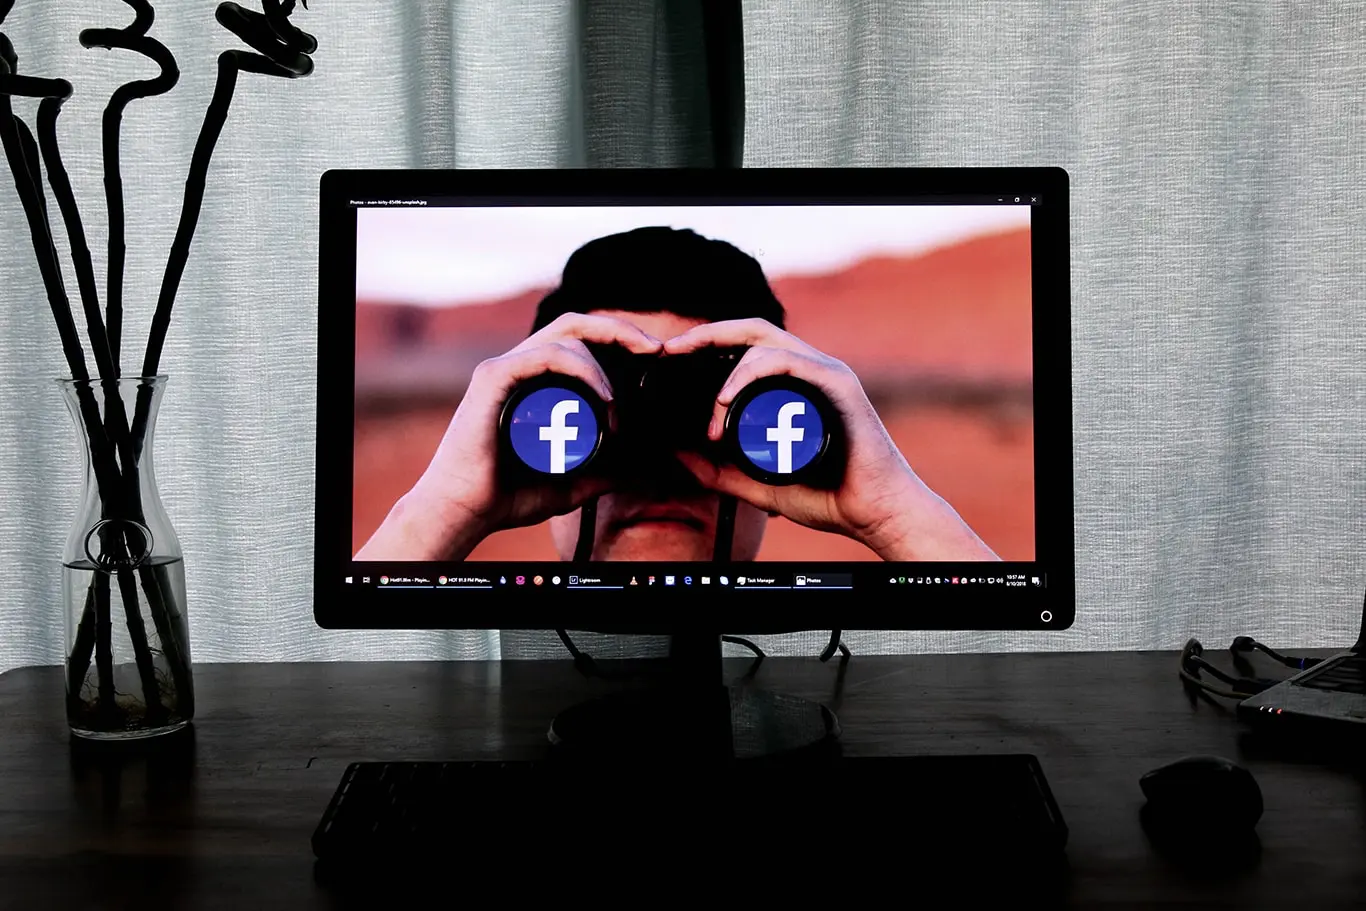 Man looking through binoculars, on a tv, which shows facebook logo